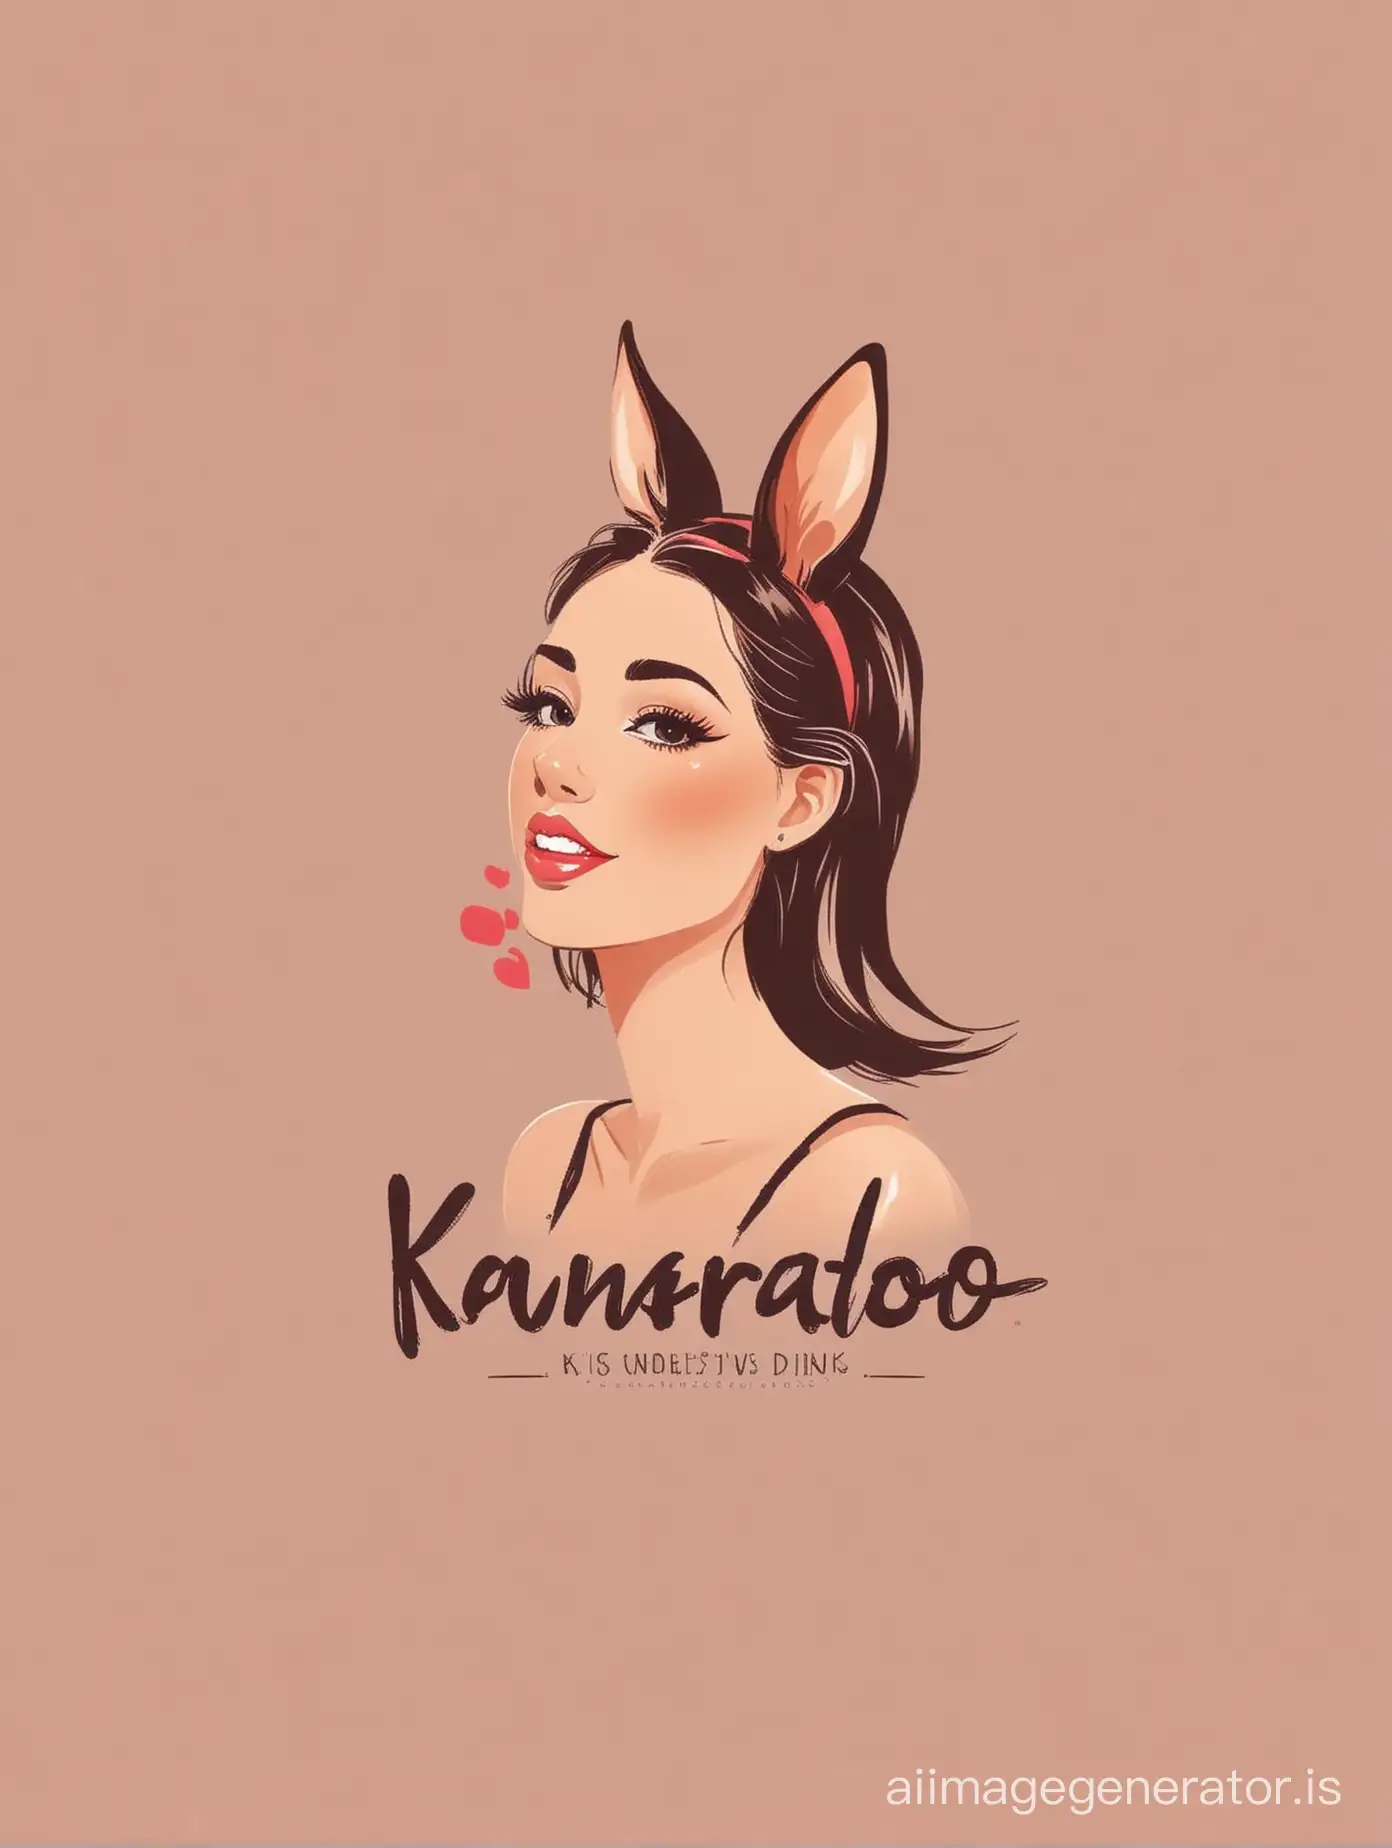 Kangaroo-Logo-Affectionate-Kiss-with-LingerieClad-Woman